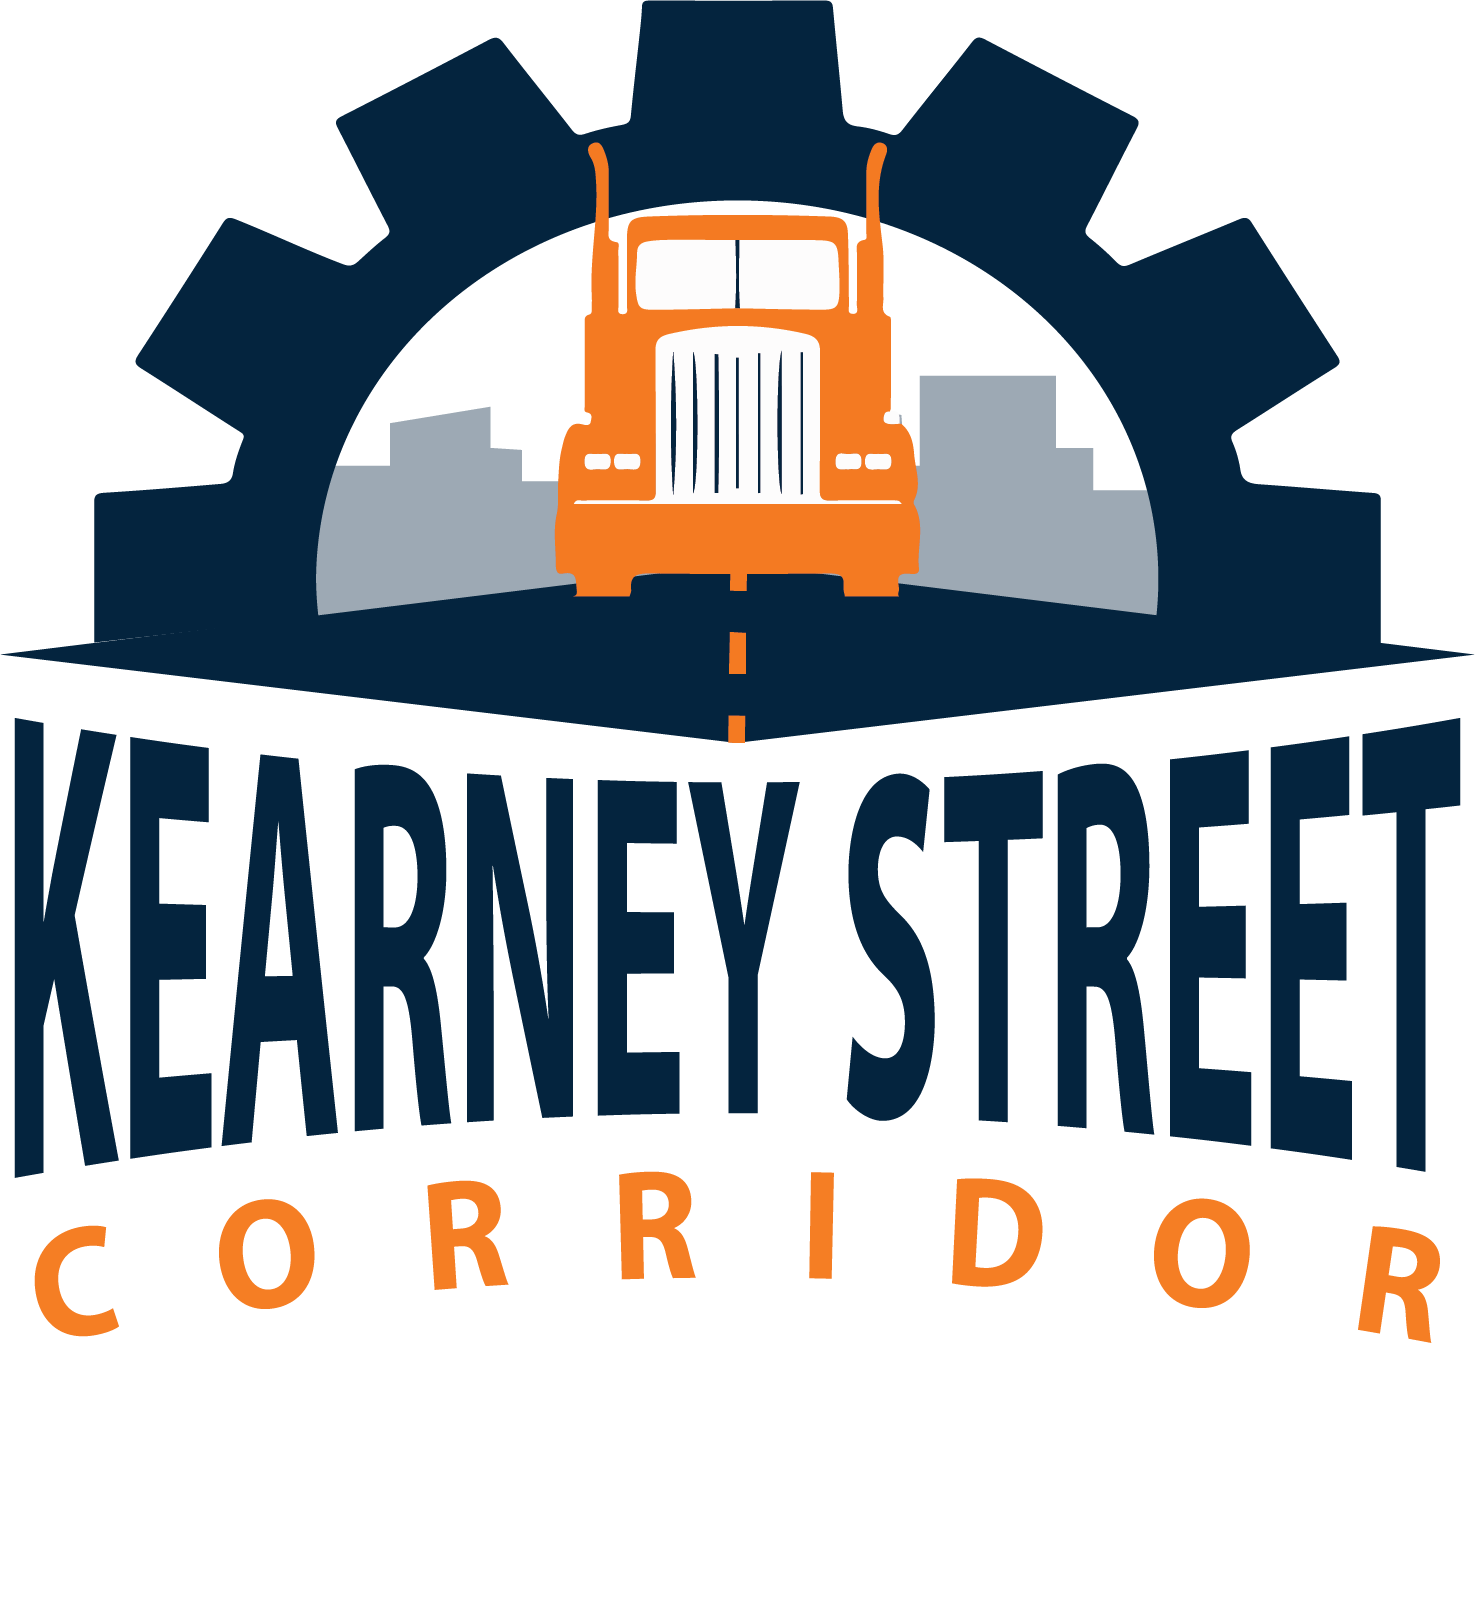 Kearney Street Corridor